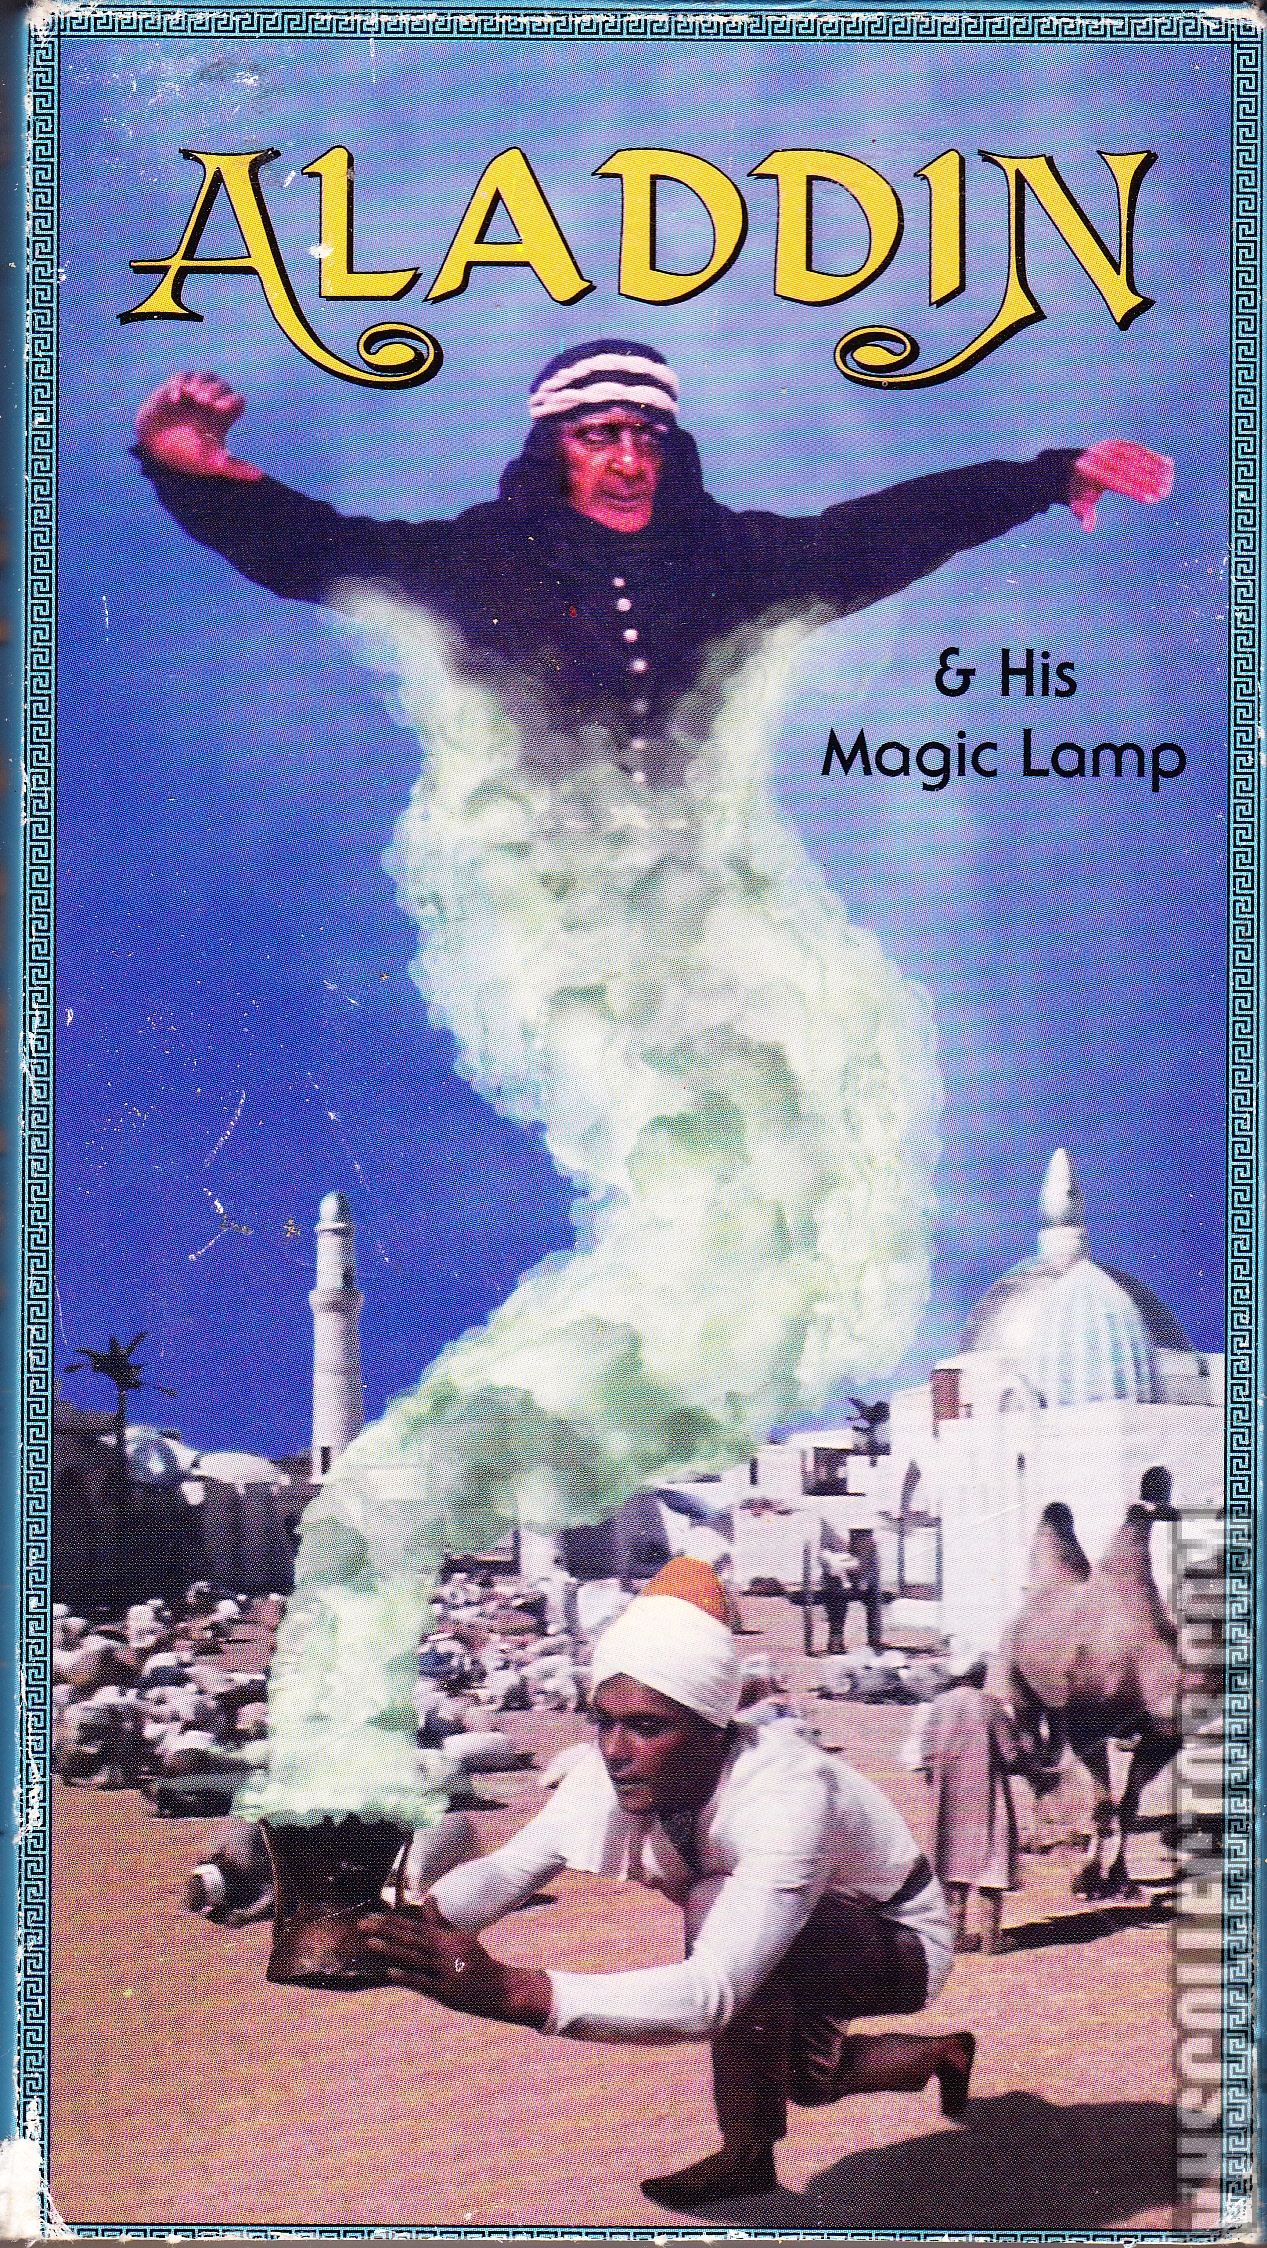 Aladdin And His Magic Lamp | VHSCollector.com